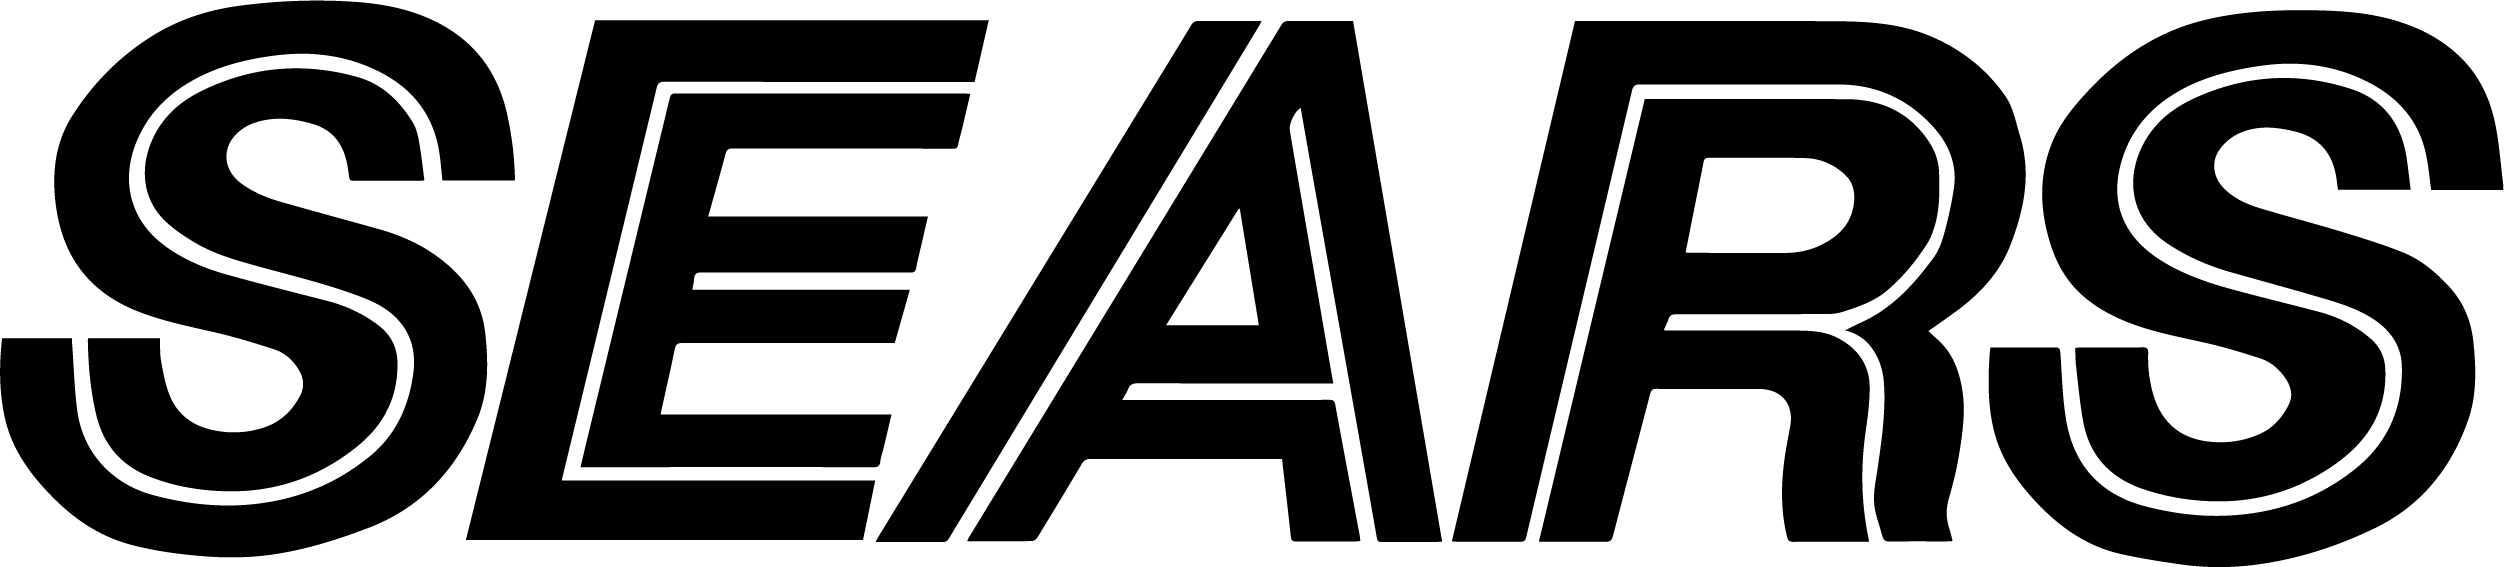 Logo SEARS